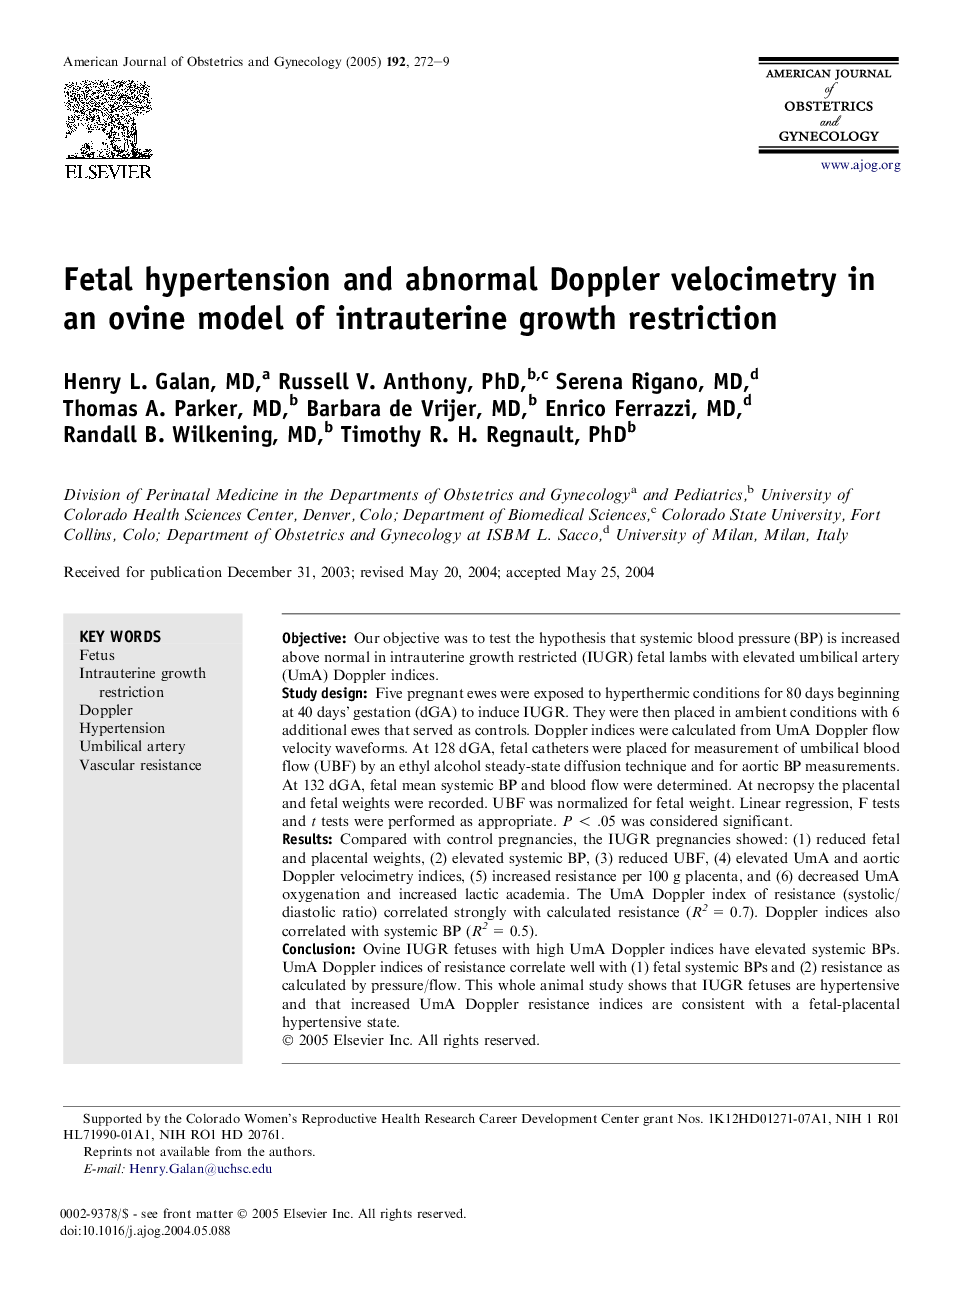 Fetal hypertension and abnormal Doppler velocimetry in an ovine model of intrauterine growth restriction